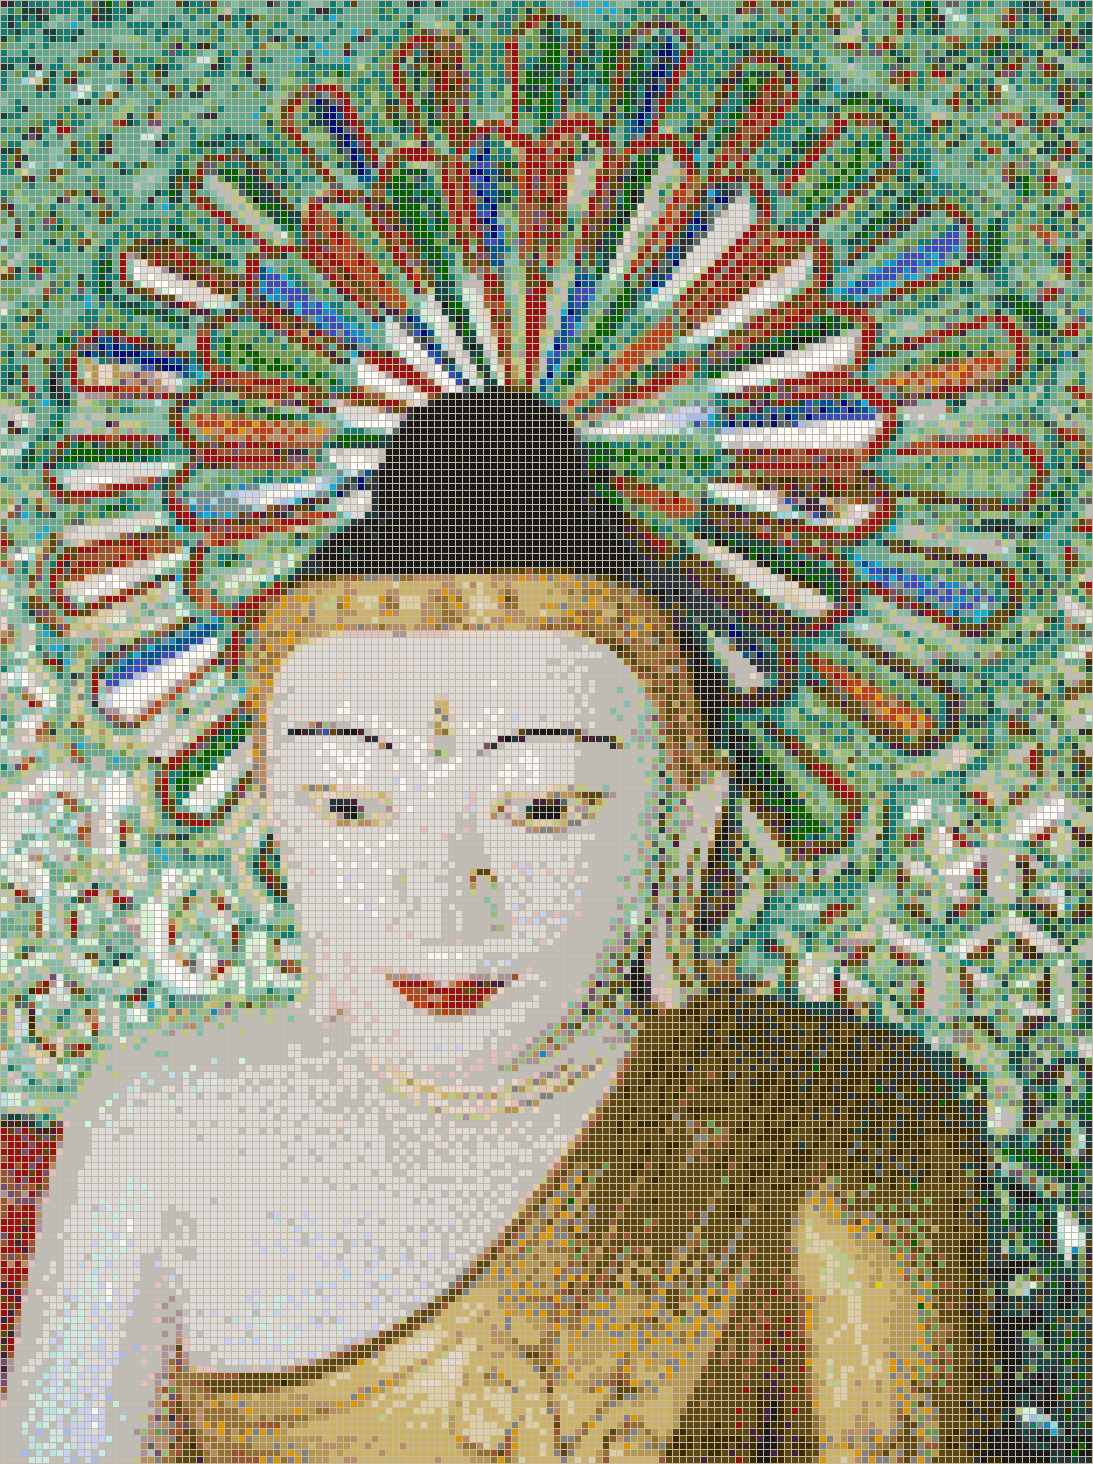 Buddah Statue (U Min Thonze, Myanmar) - Mosaic Tile Picture Art